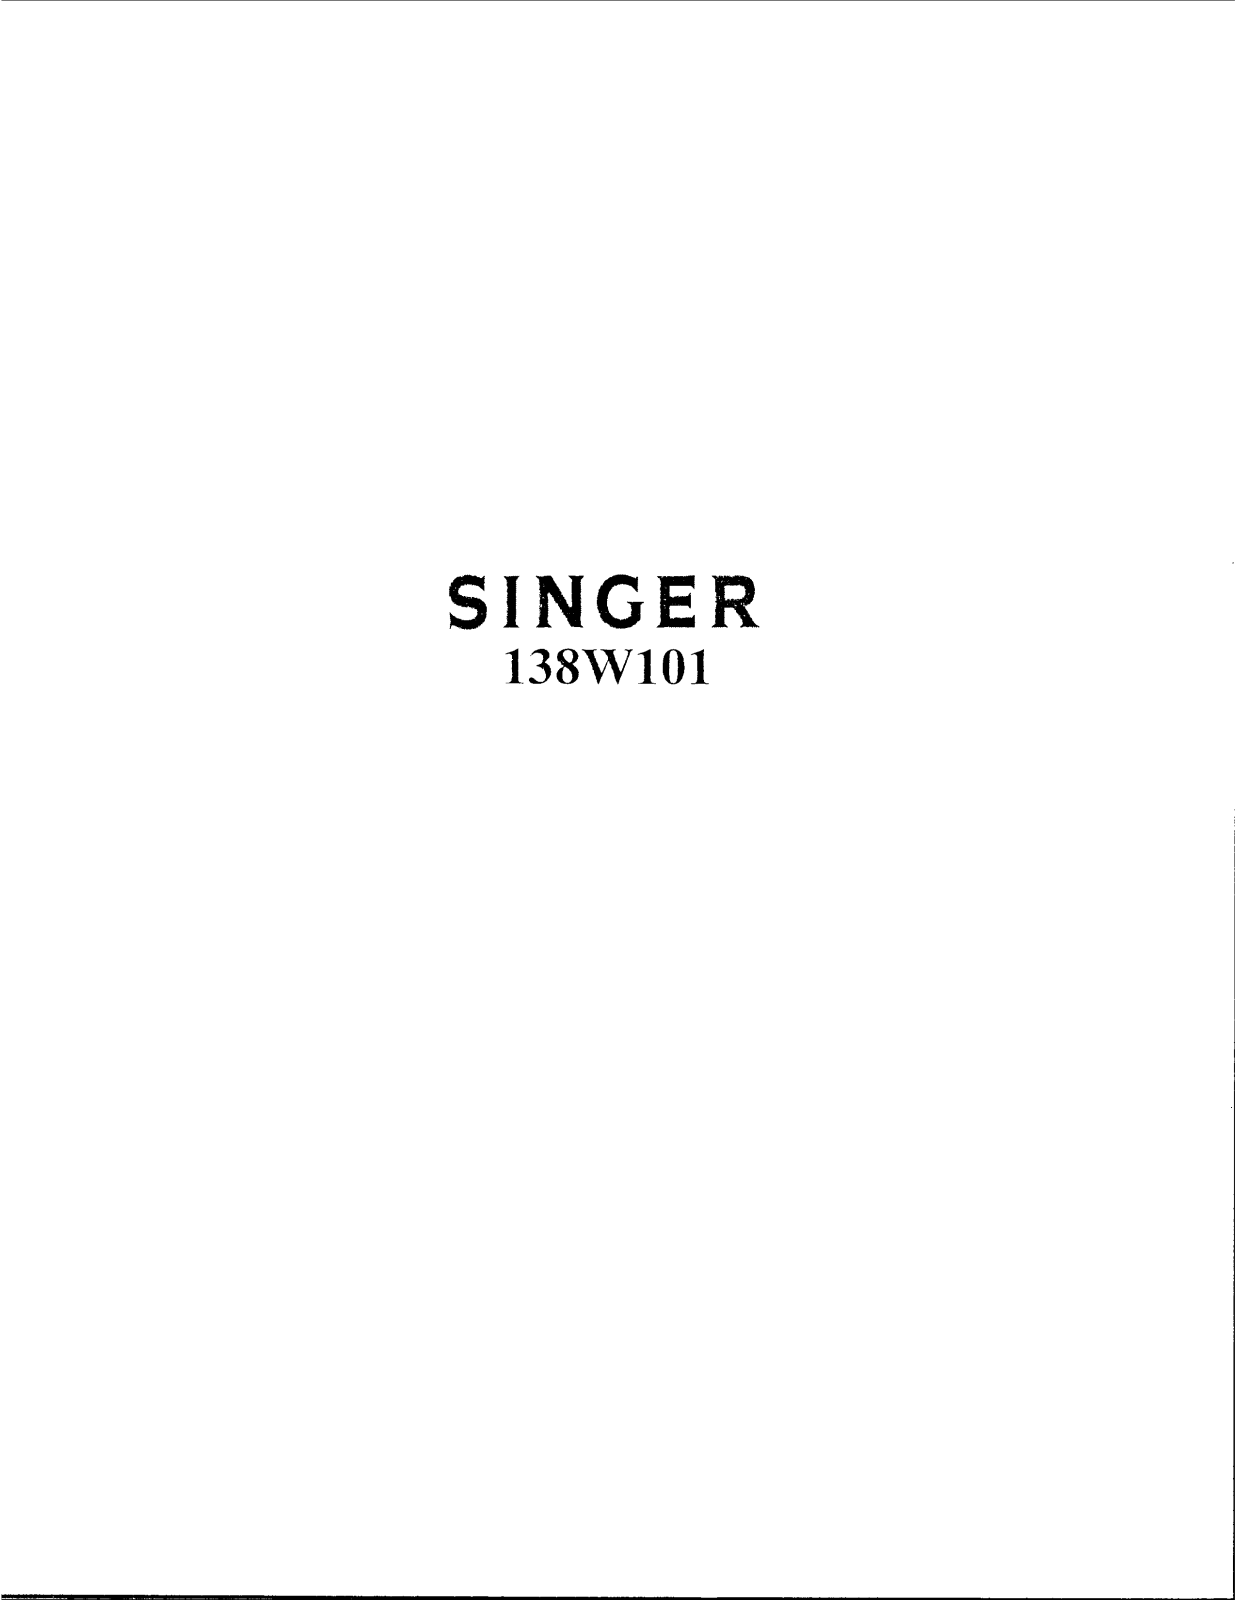 Singer 138W101 User Manual